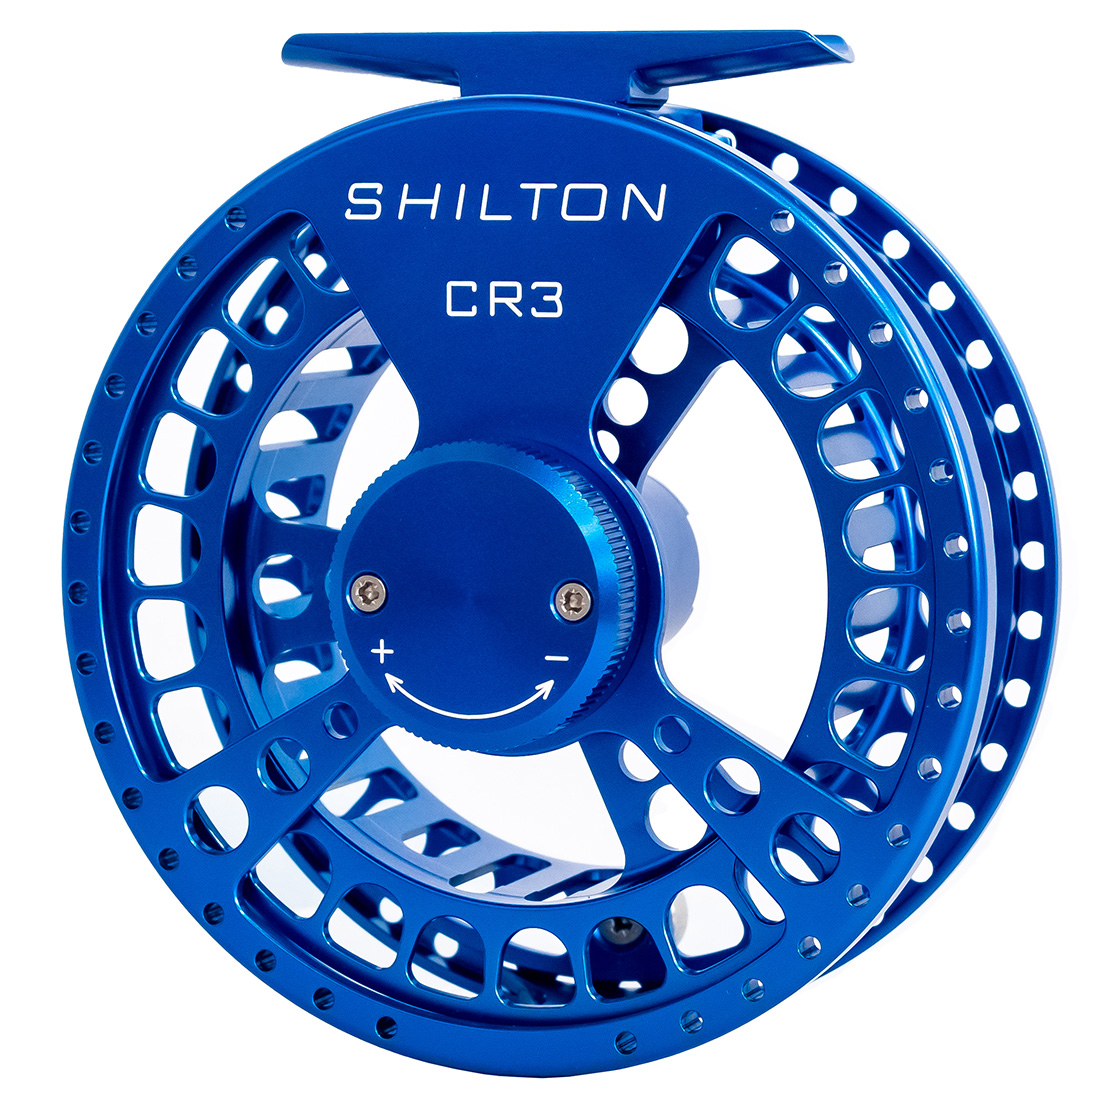 Shilton CR Series Fly Reel blue, Reels, Fly Reels